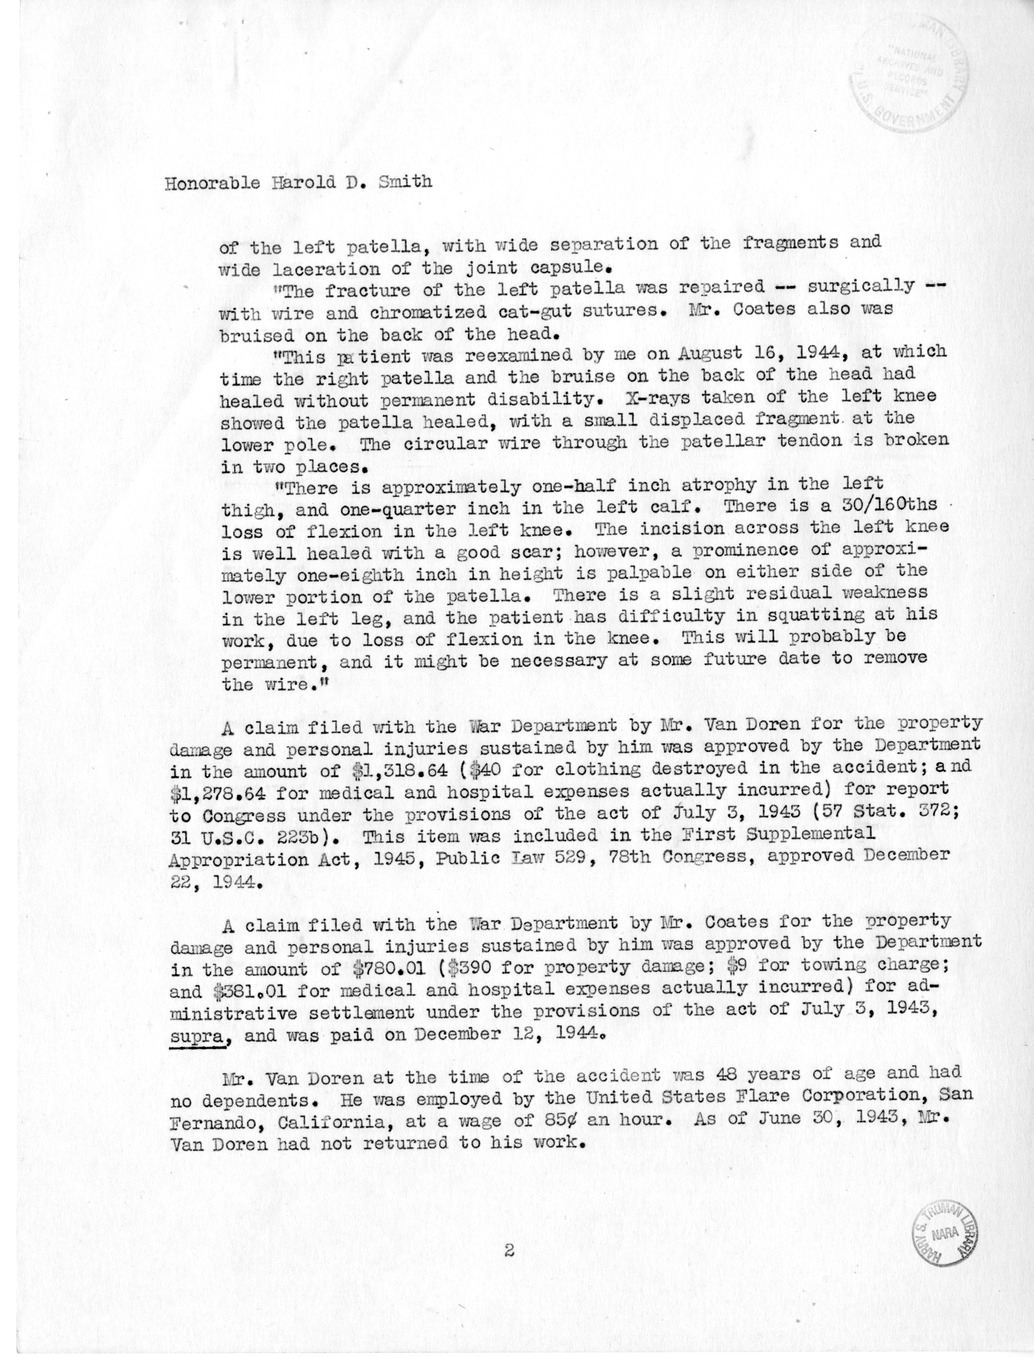 Memorandum from Frederick J. Bailey to M. C. Latta, S. 407, For the Relief of Pierce William Van Doren and Elmer J. Coates, with Attachments